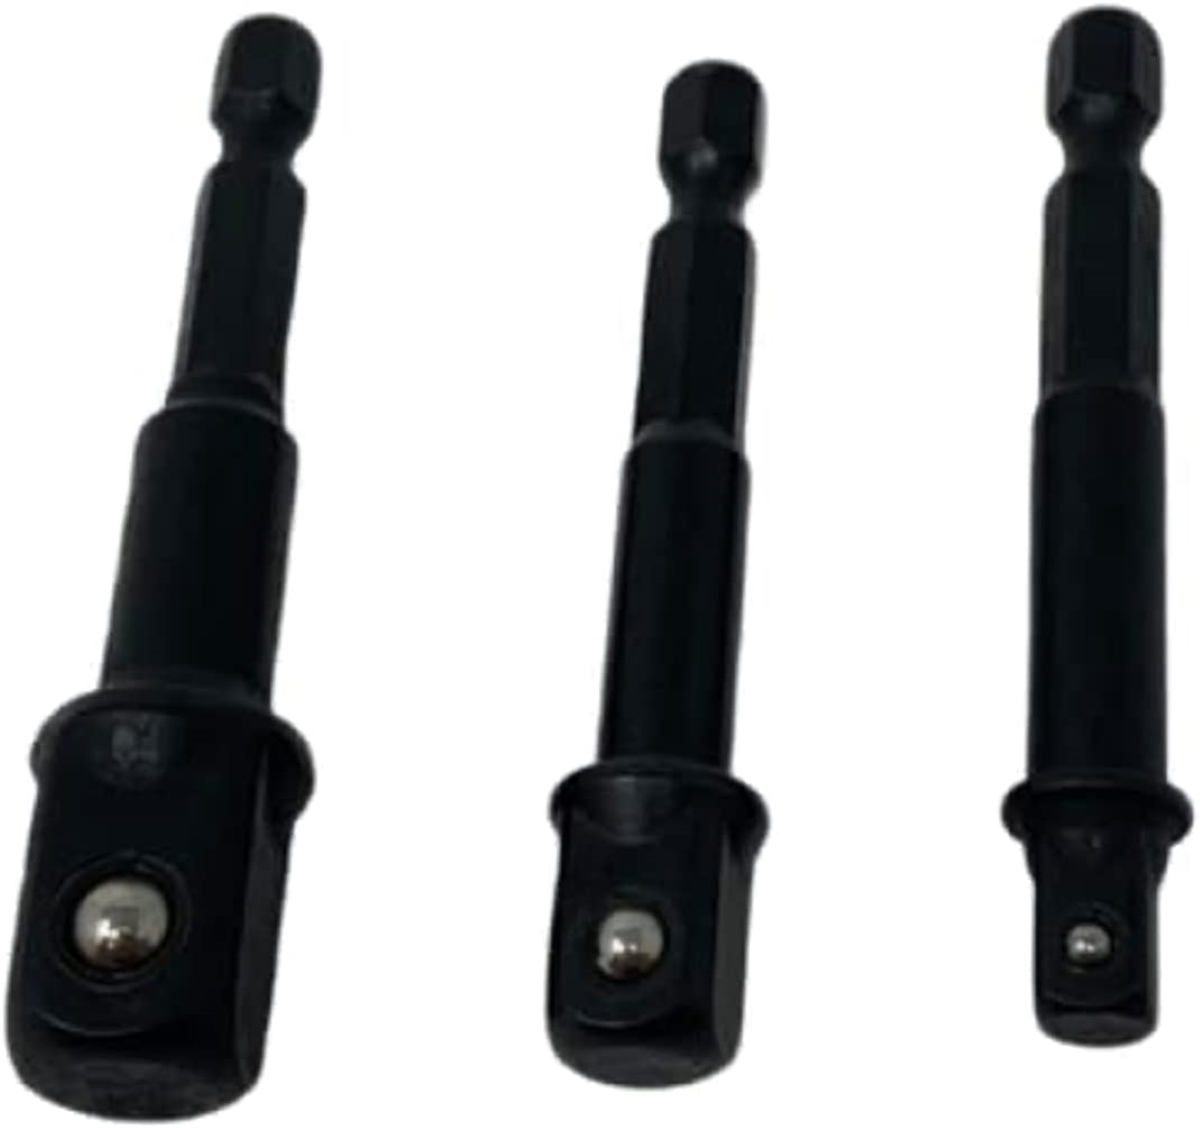 useful power drill attachments - three socket drivers